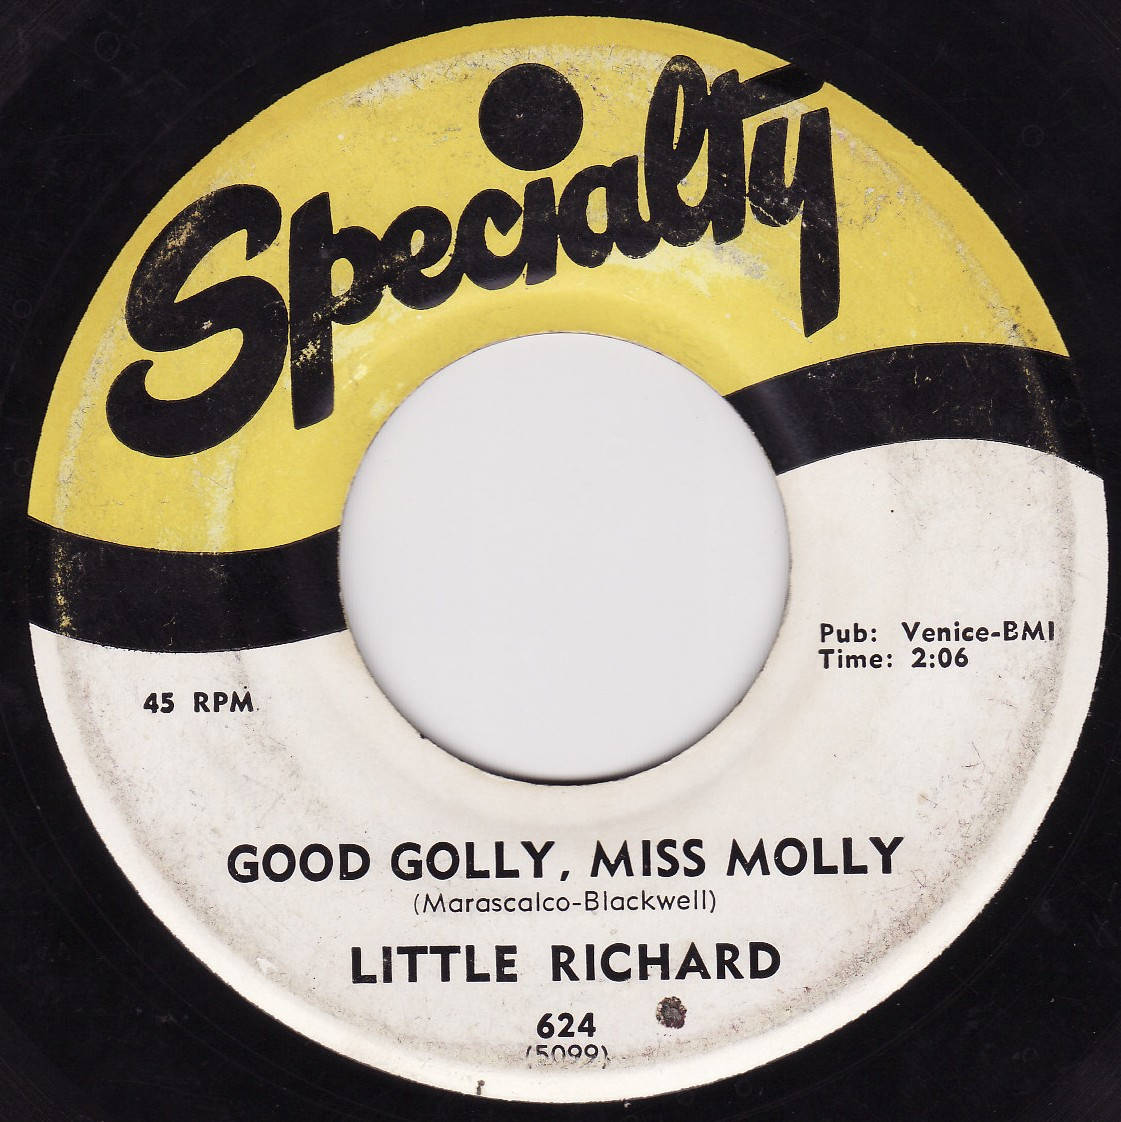 Littlerichard - Buona Golly, Signorina Molly Canzone Sfondo